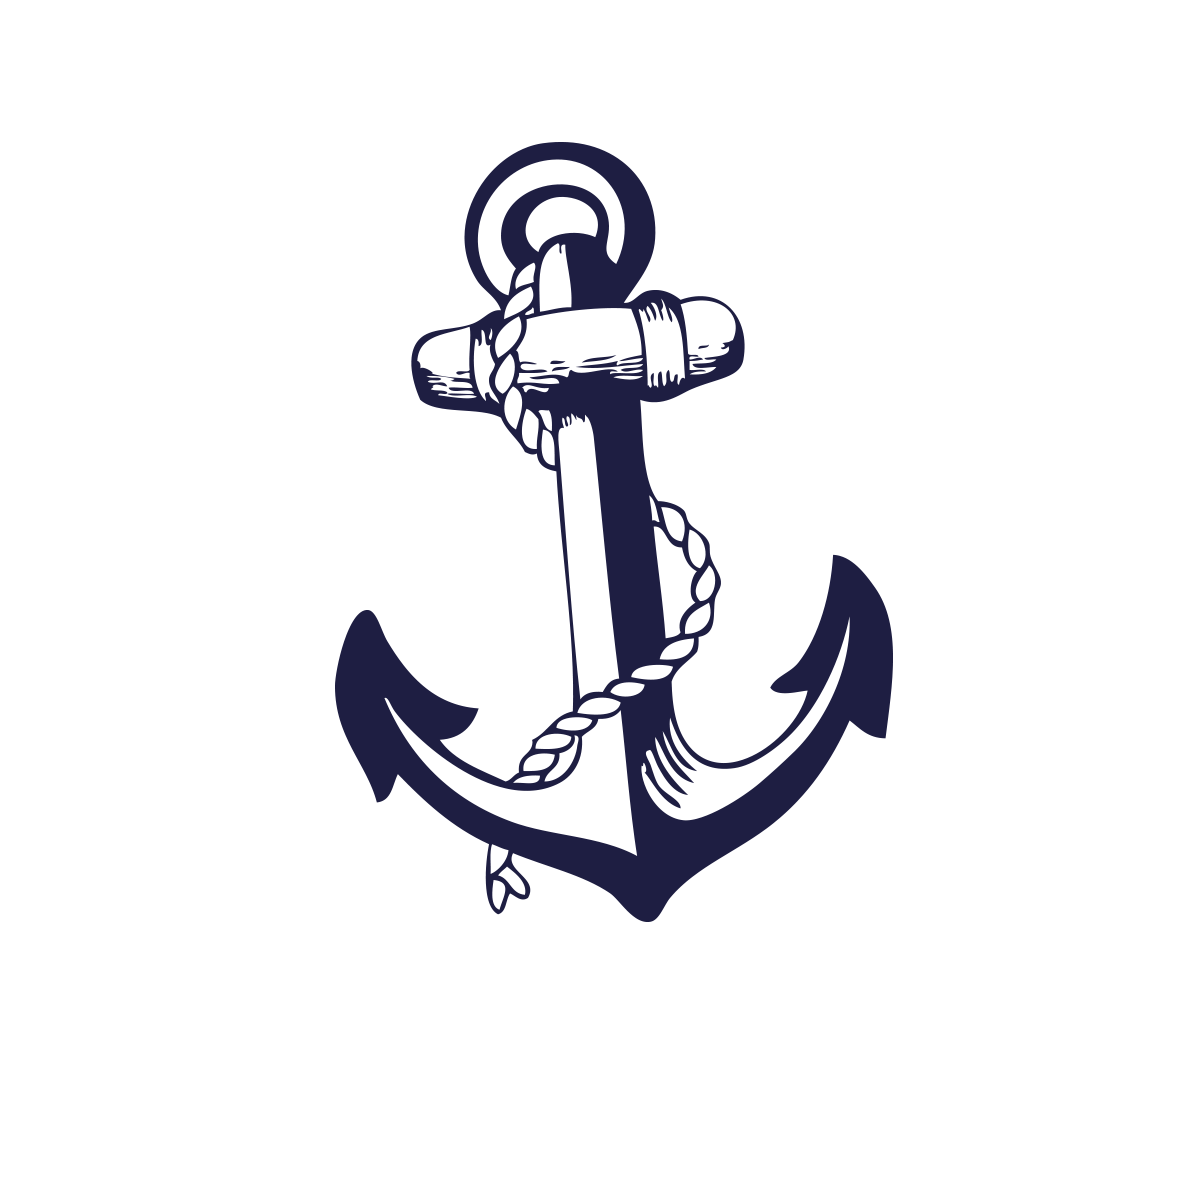 clipart anchor shaded